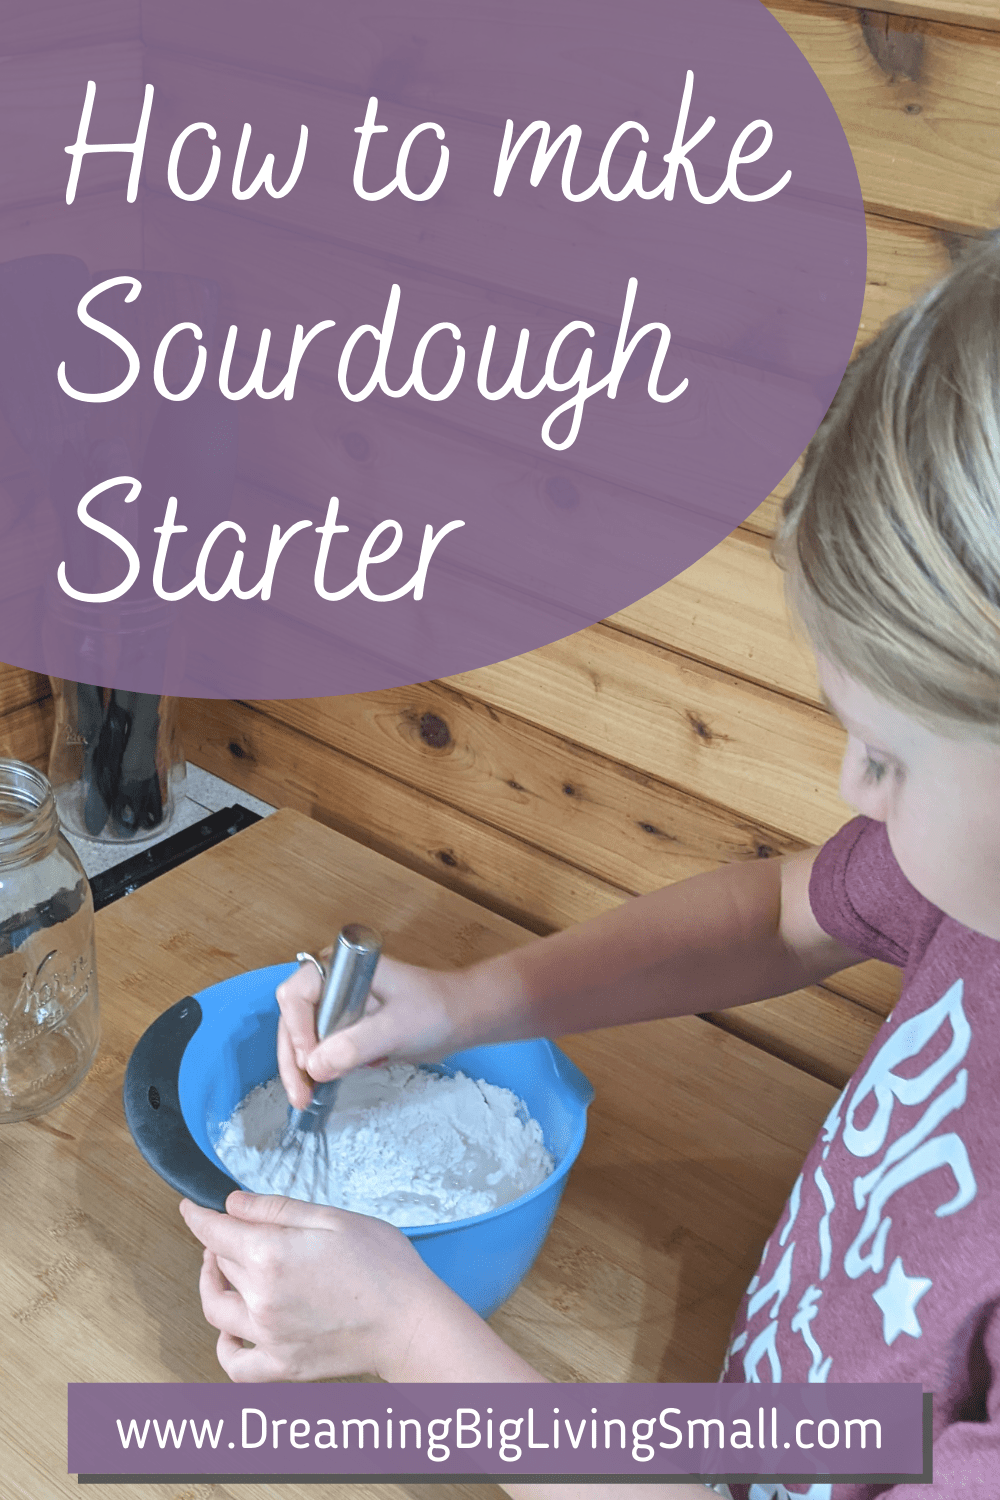 How to make Sourdough Starter